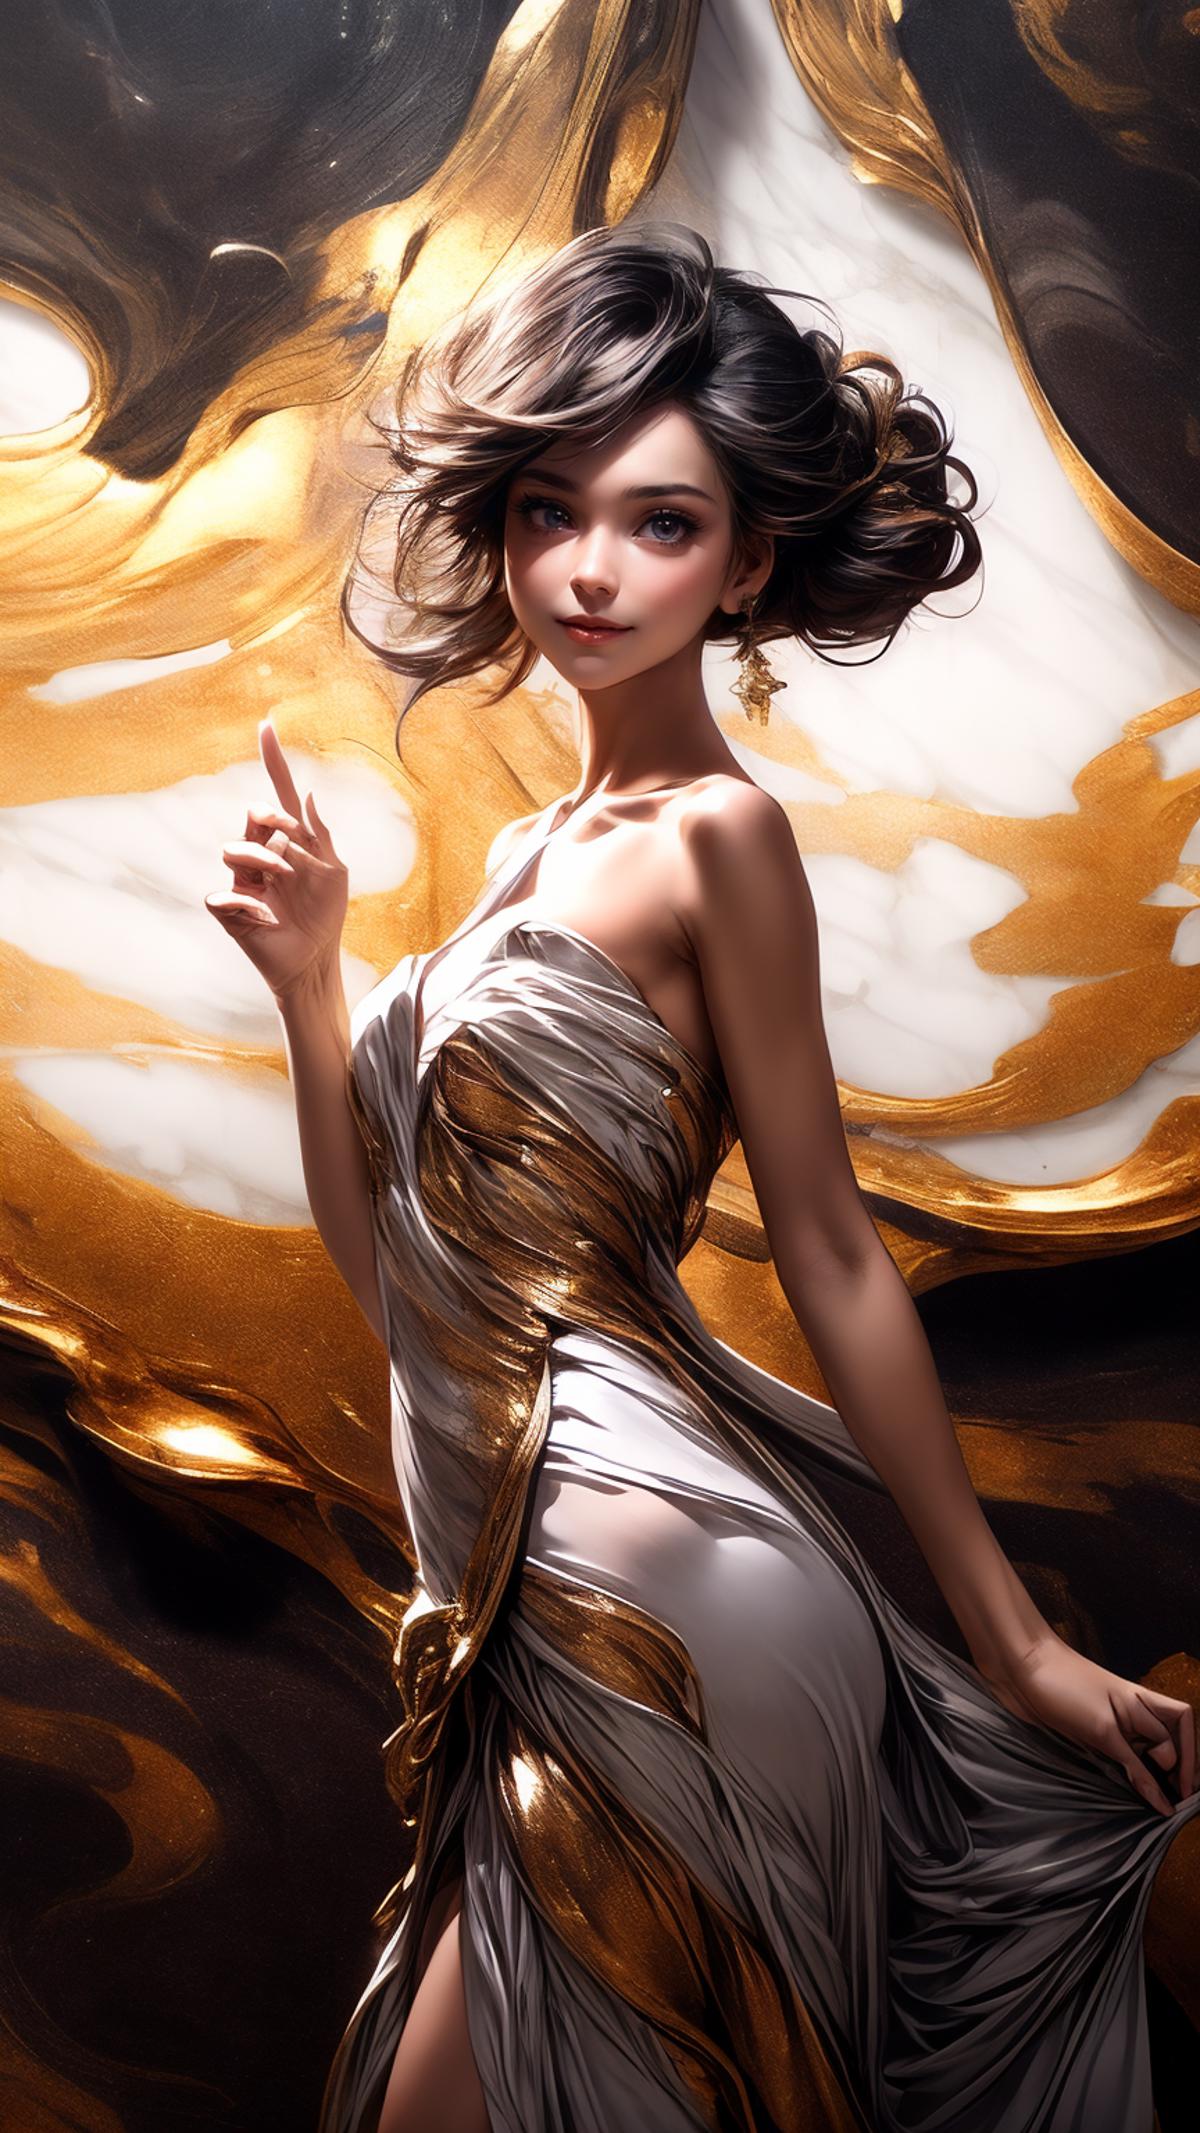 Marble dress | 大理石裙 image by tonyhs